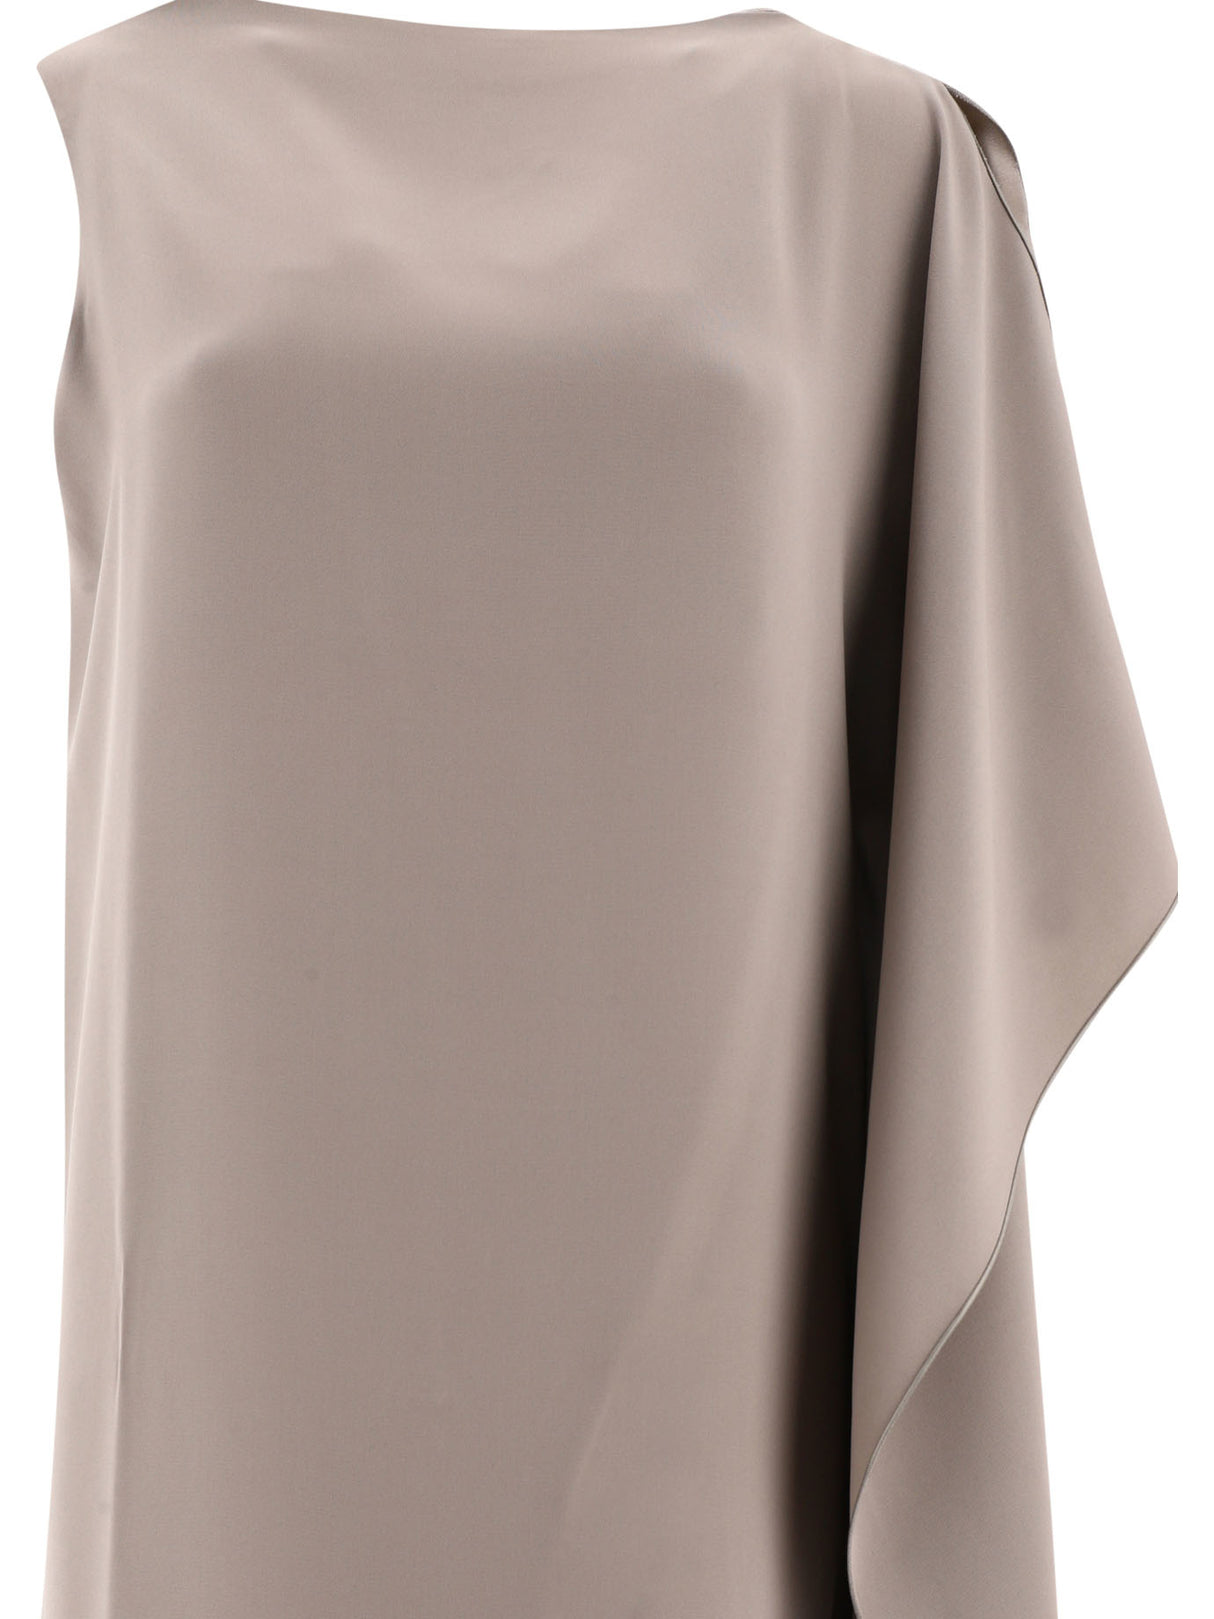 MAX MARA PIANOFORTE Elegant Gray One-Shoulder Silk Dress for Women